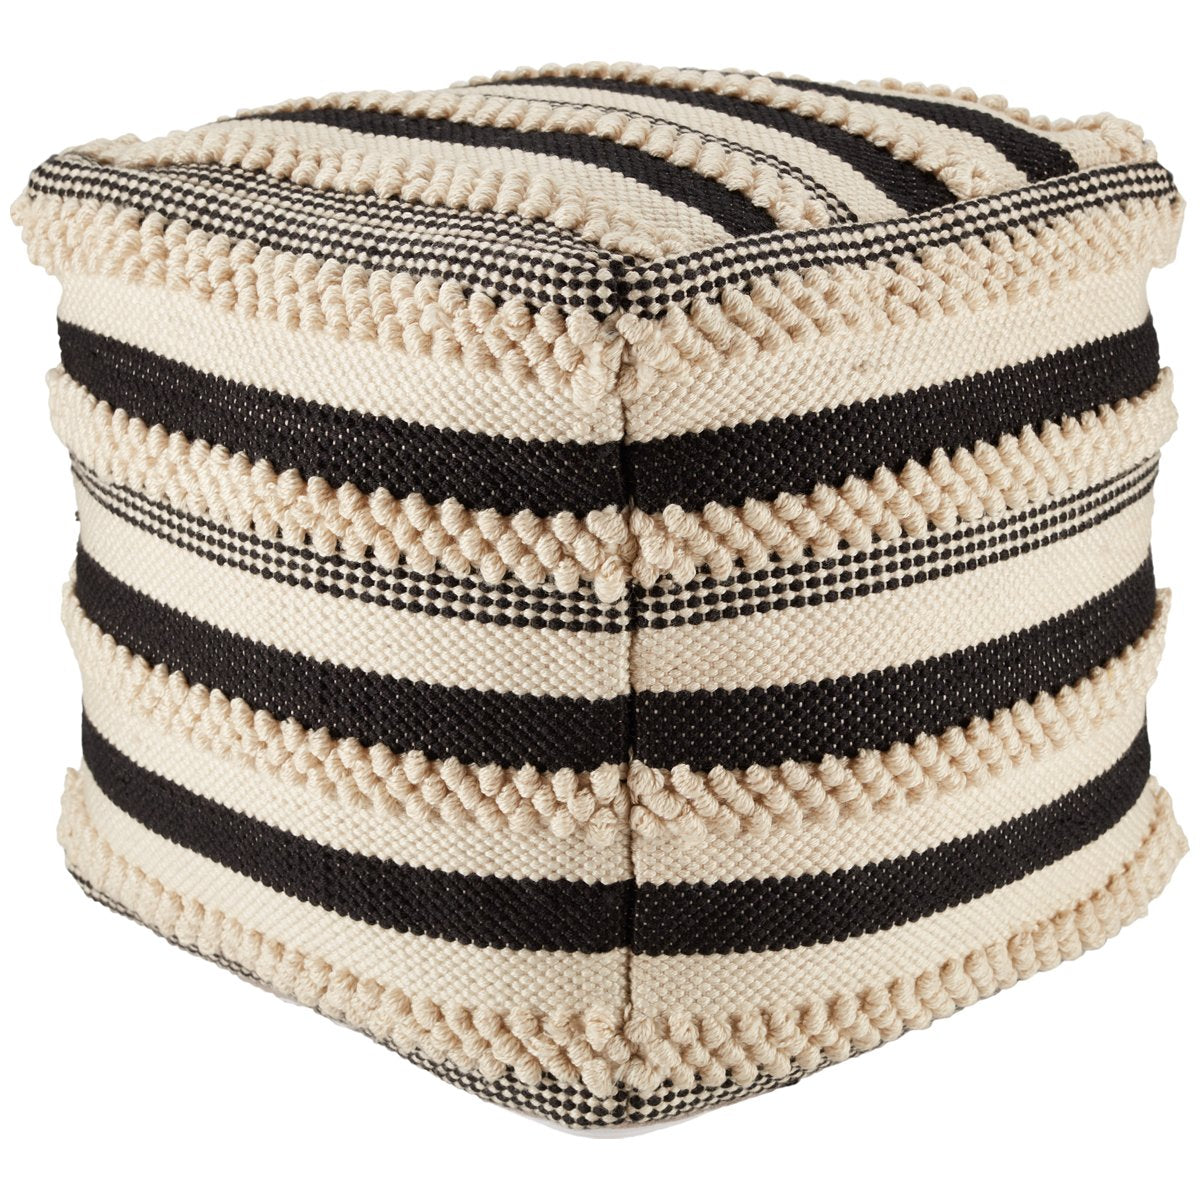 Jaipur Mandolin Meknes Stripes Textured Black Cream MDL01 Pouf